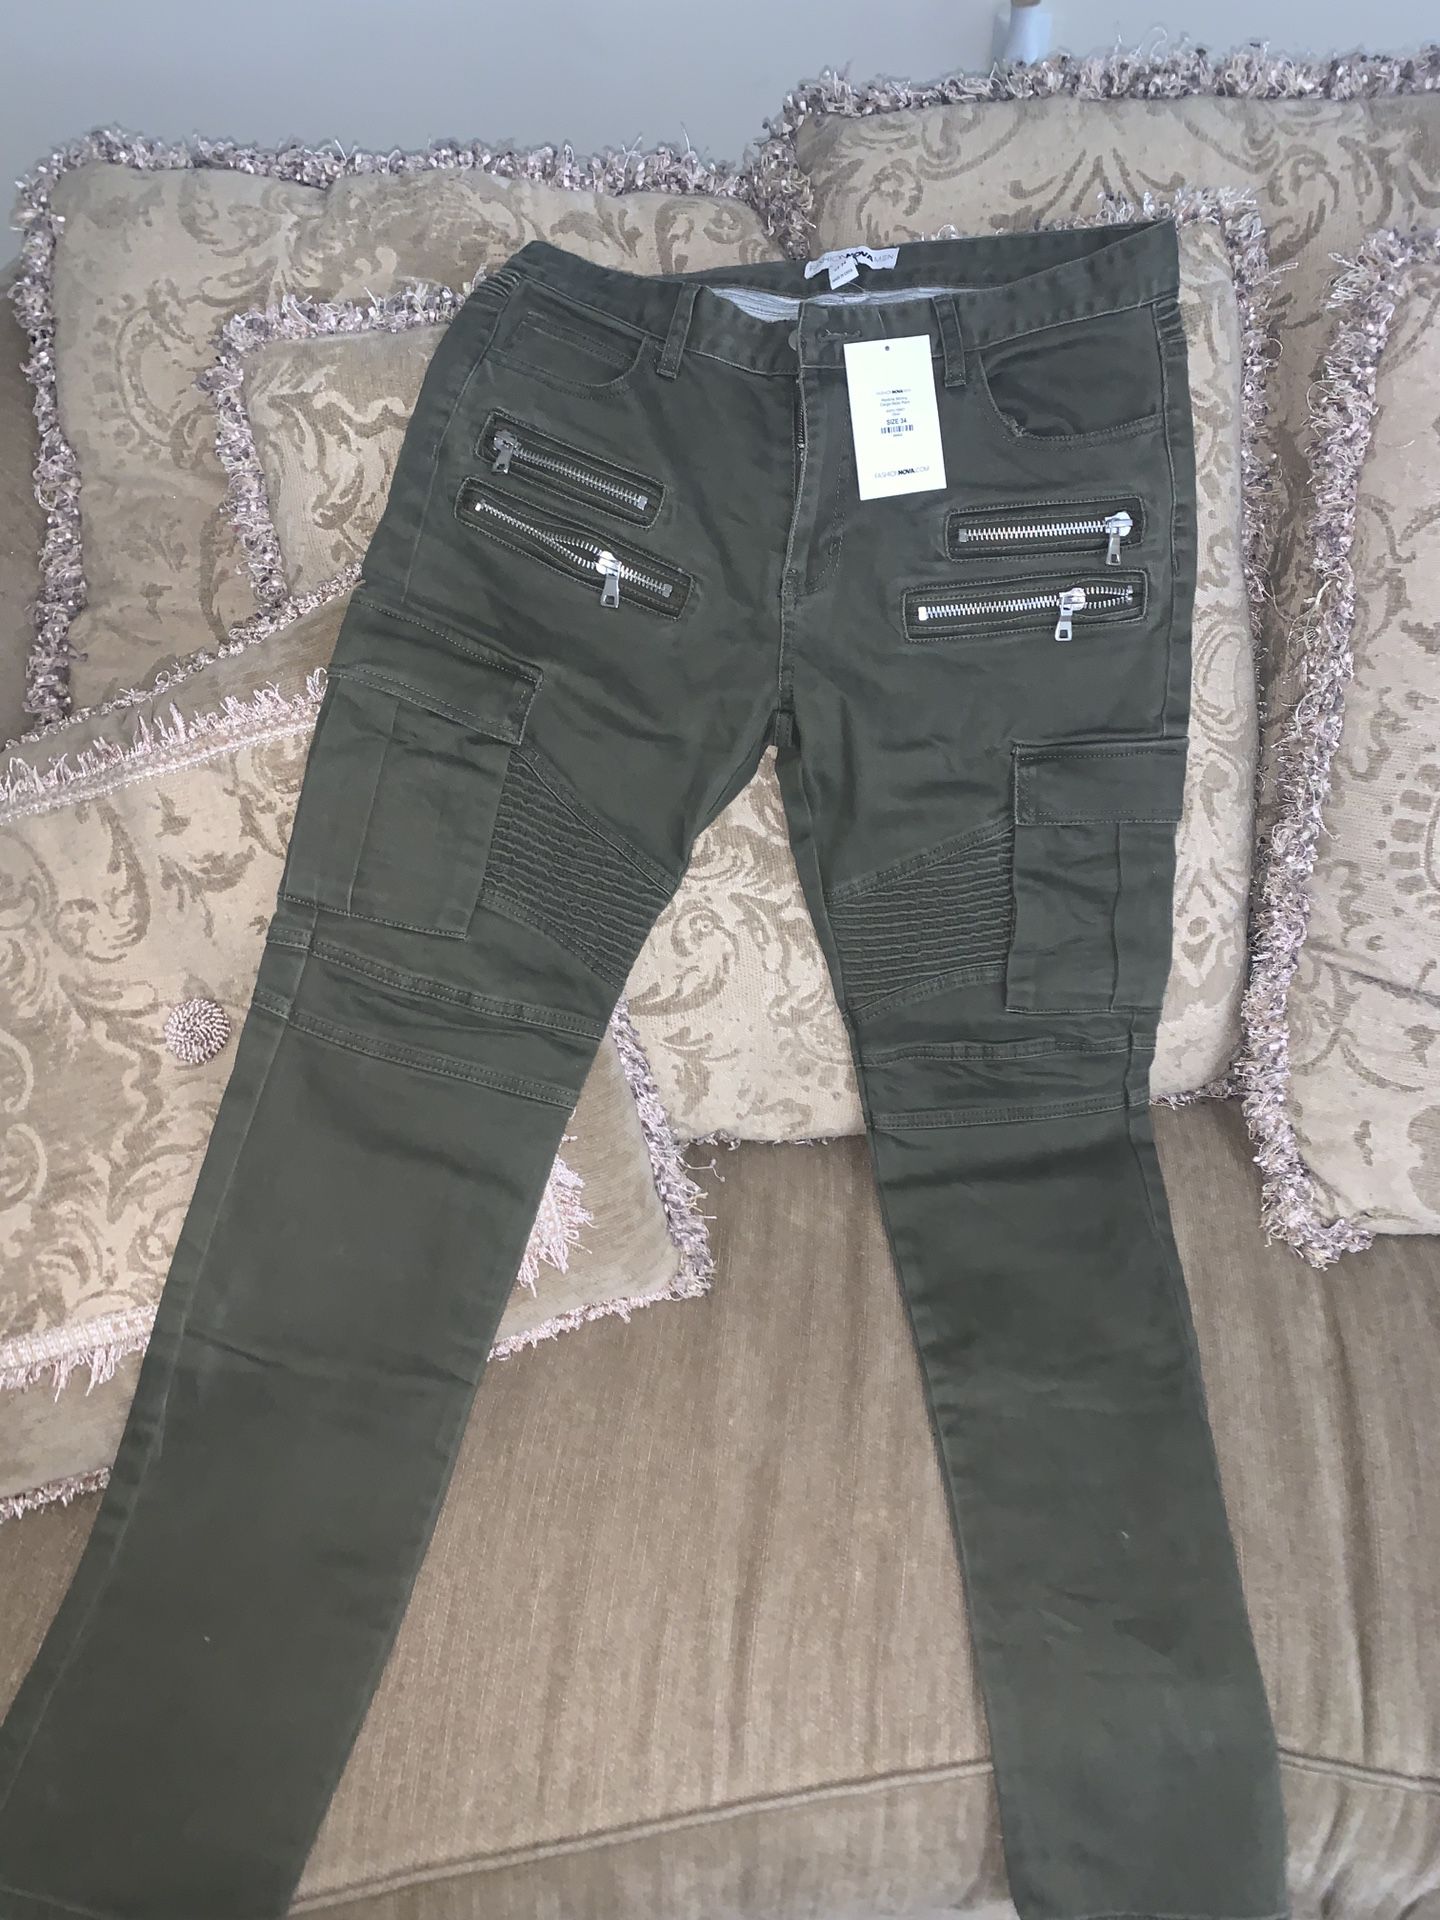 Men’s fashion nova cargo pants size 34 NEVER WORN